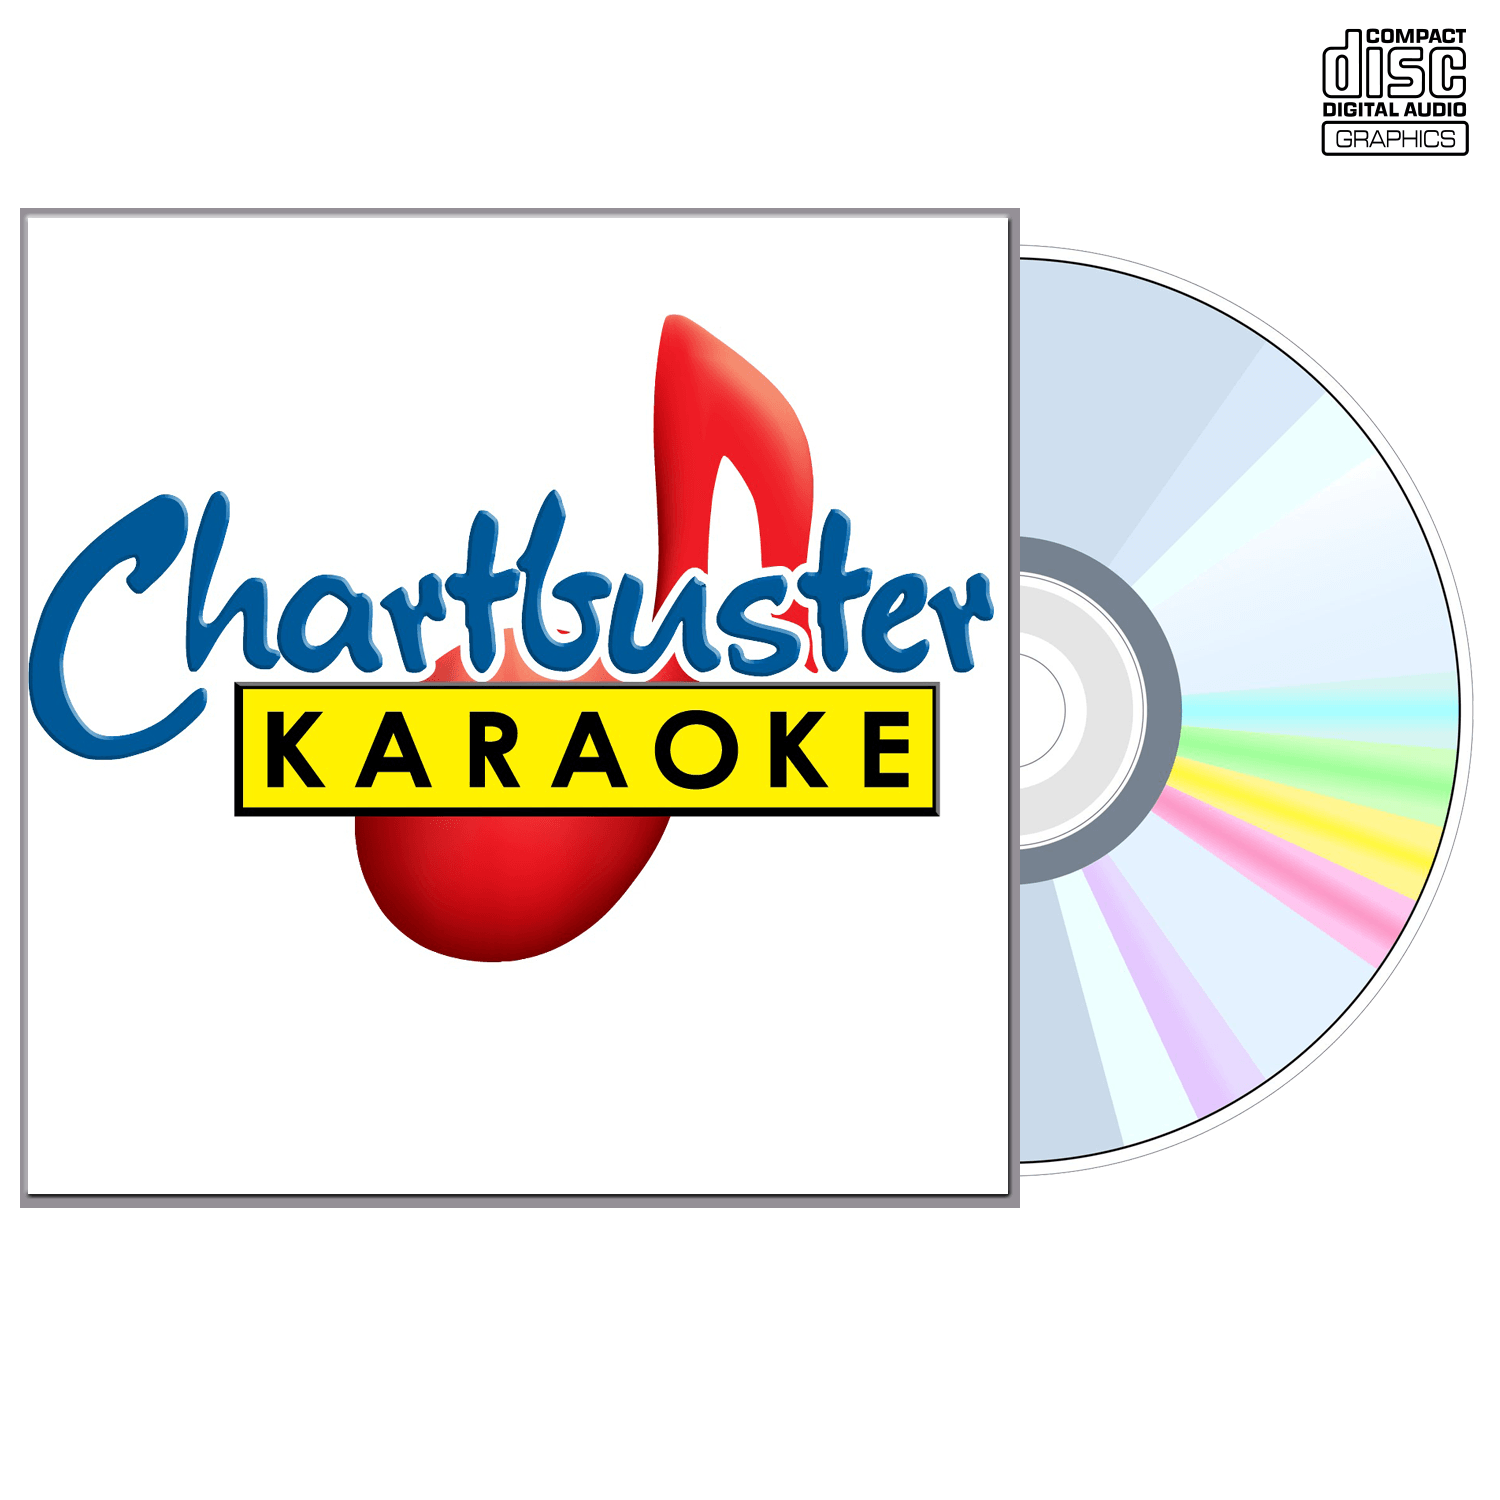 Madonna Vol 1 - CD+G - Chartbuster Karaoke - Karaoke Home Entertainment